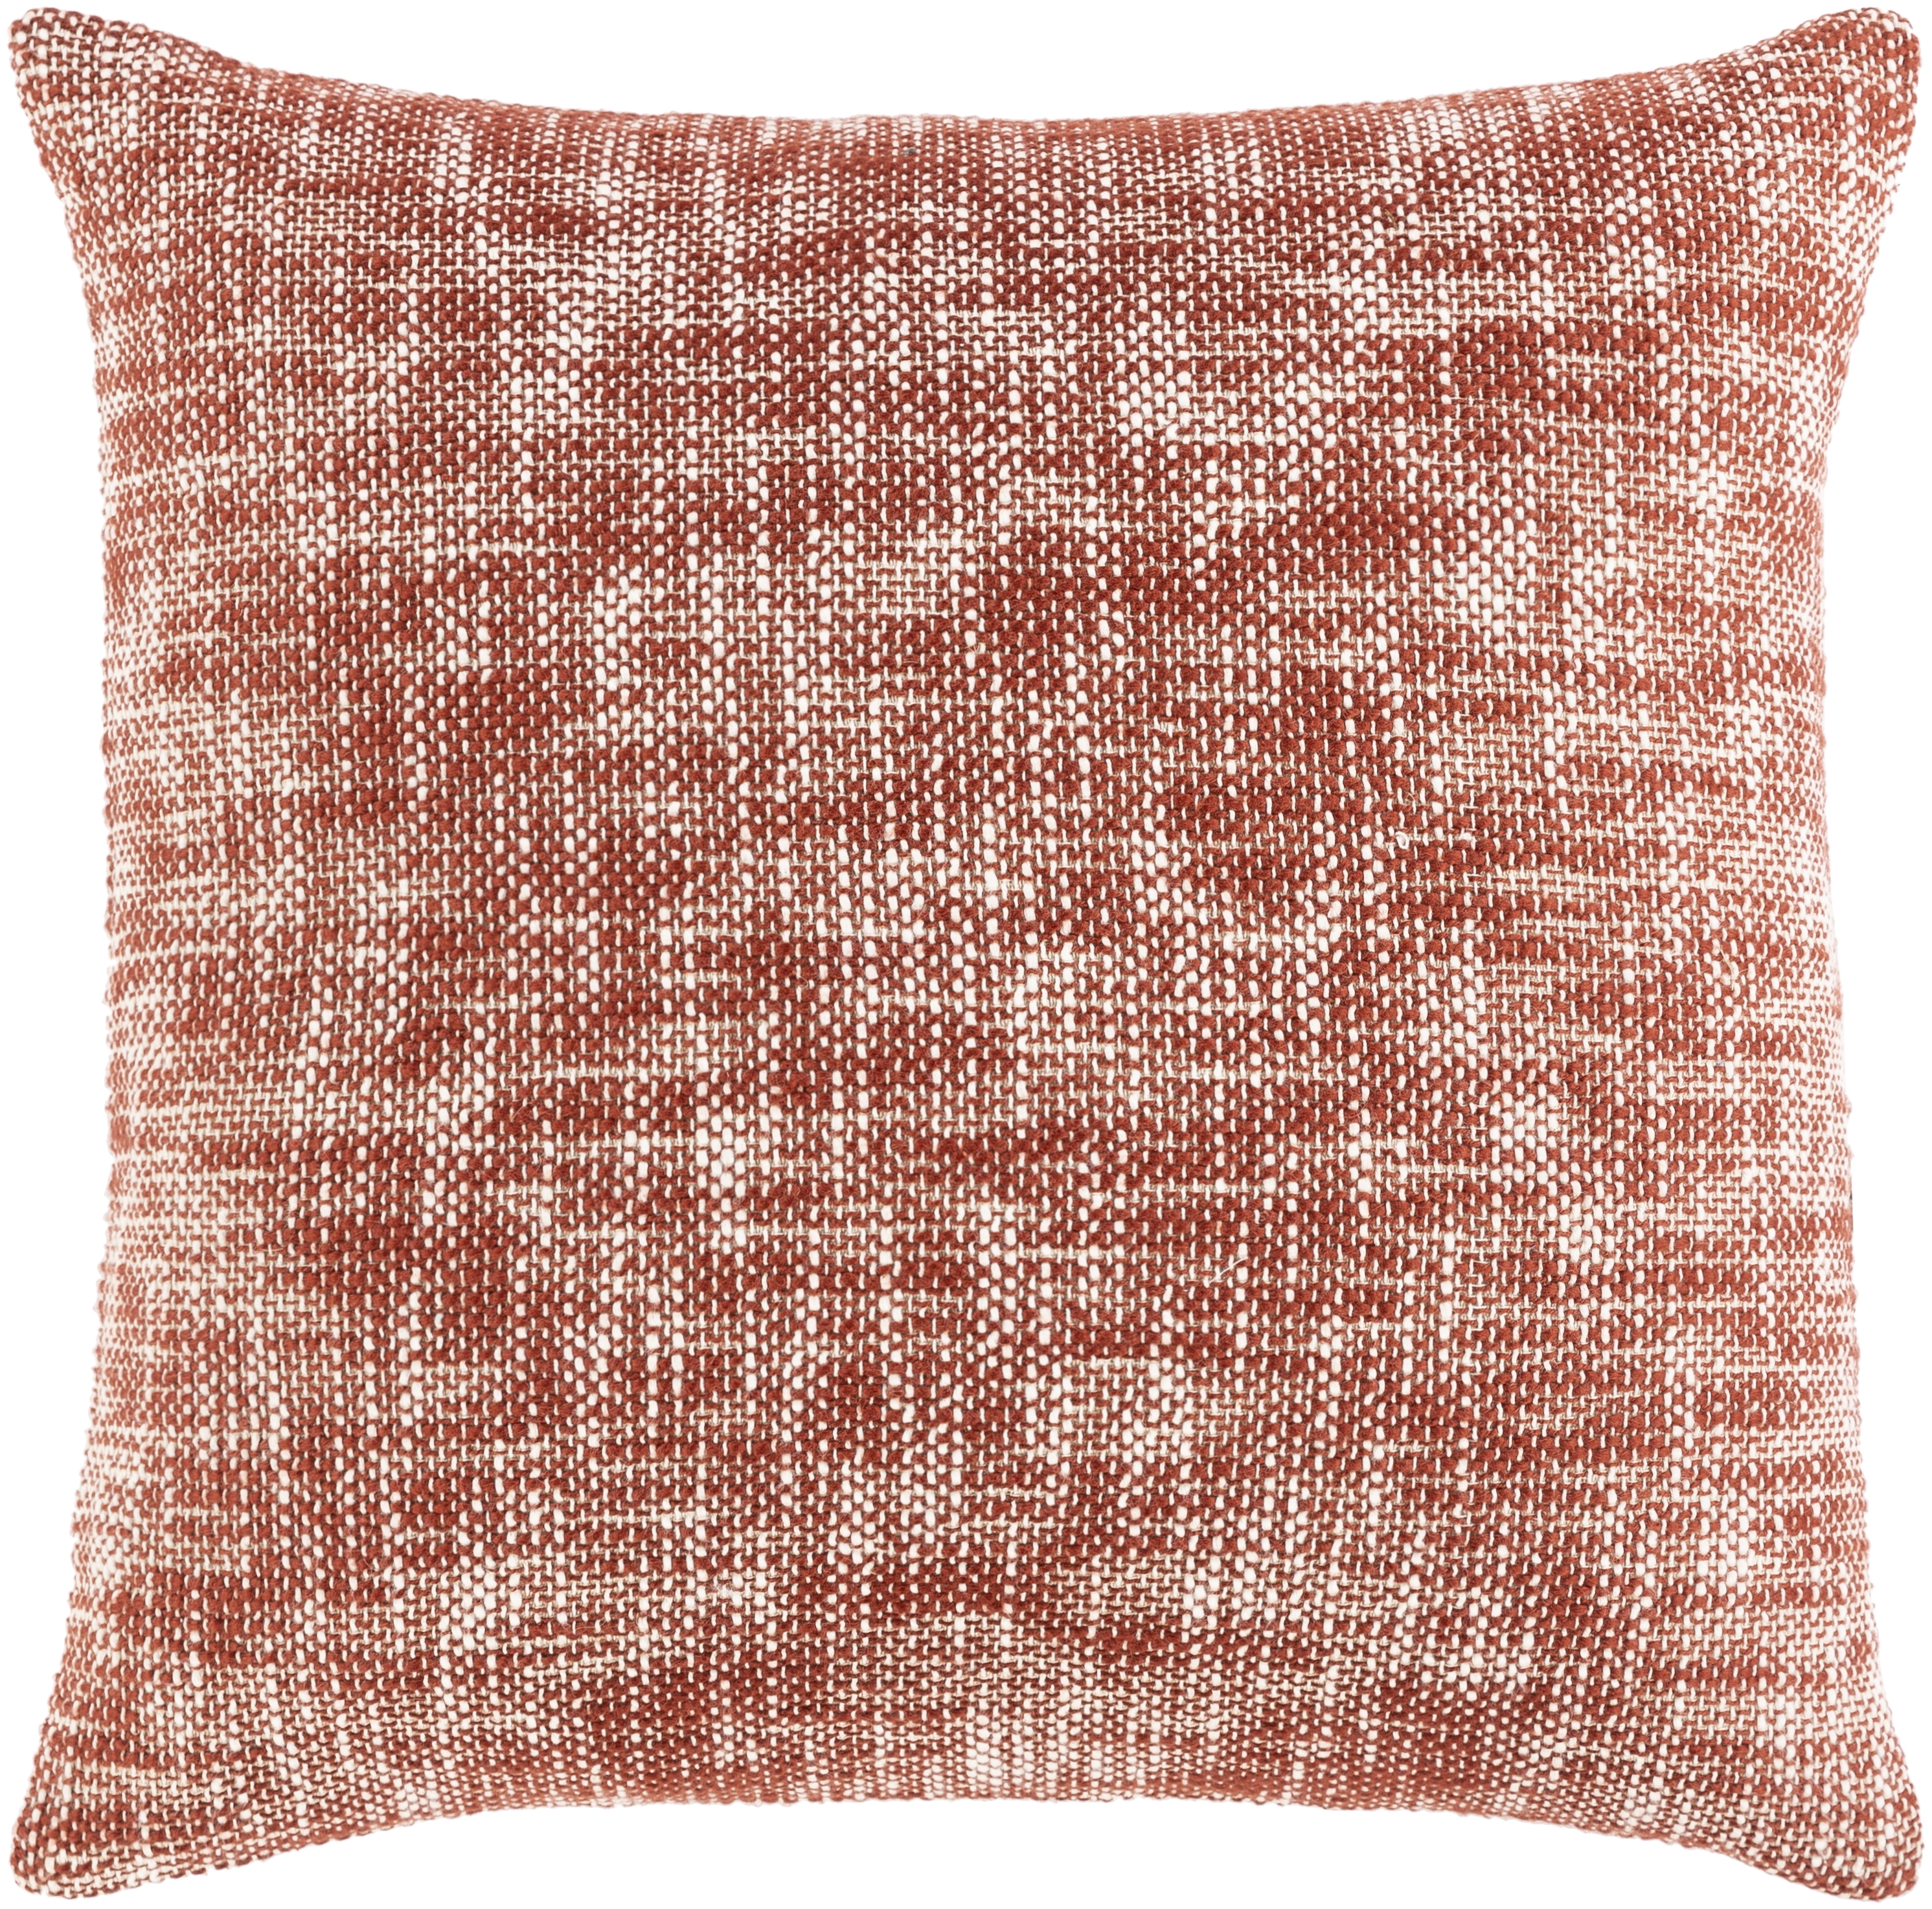 Suri Throw Pillow, 18" x 18", with poly insert - Image 0